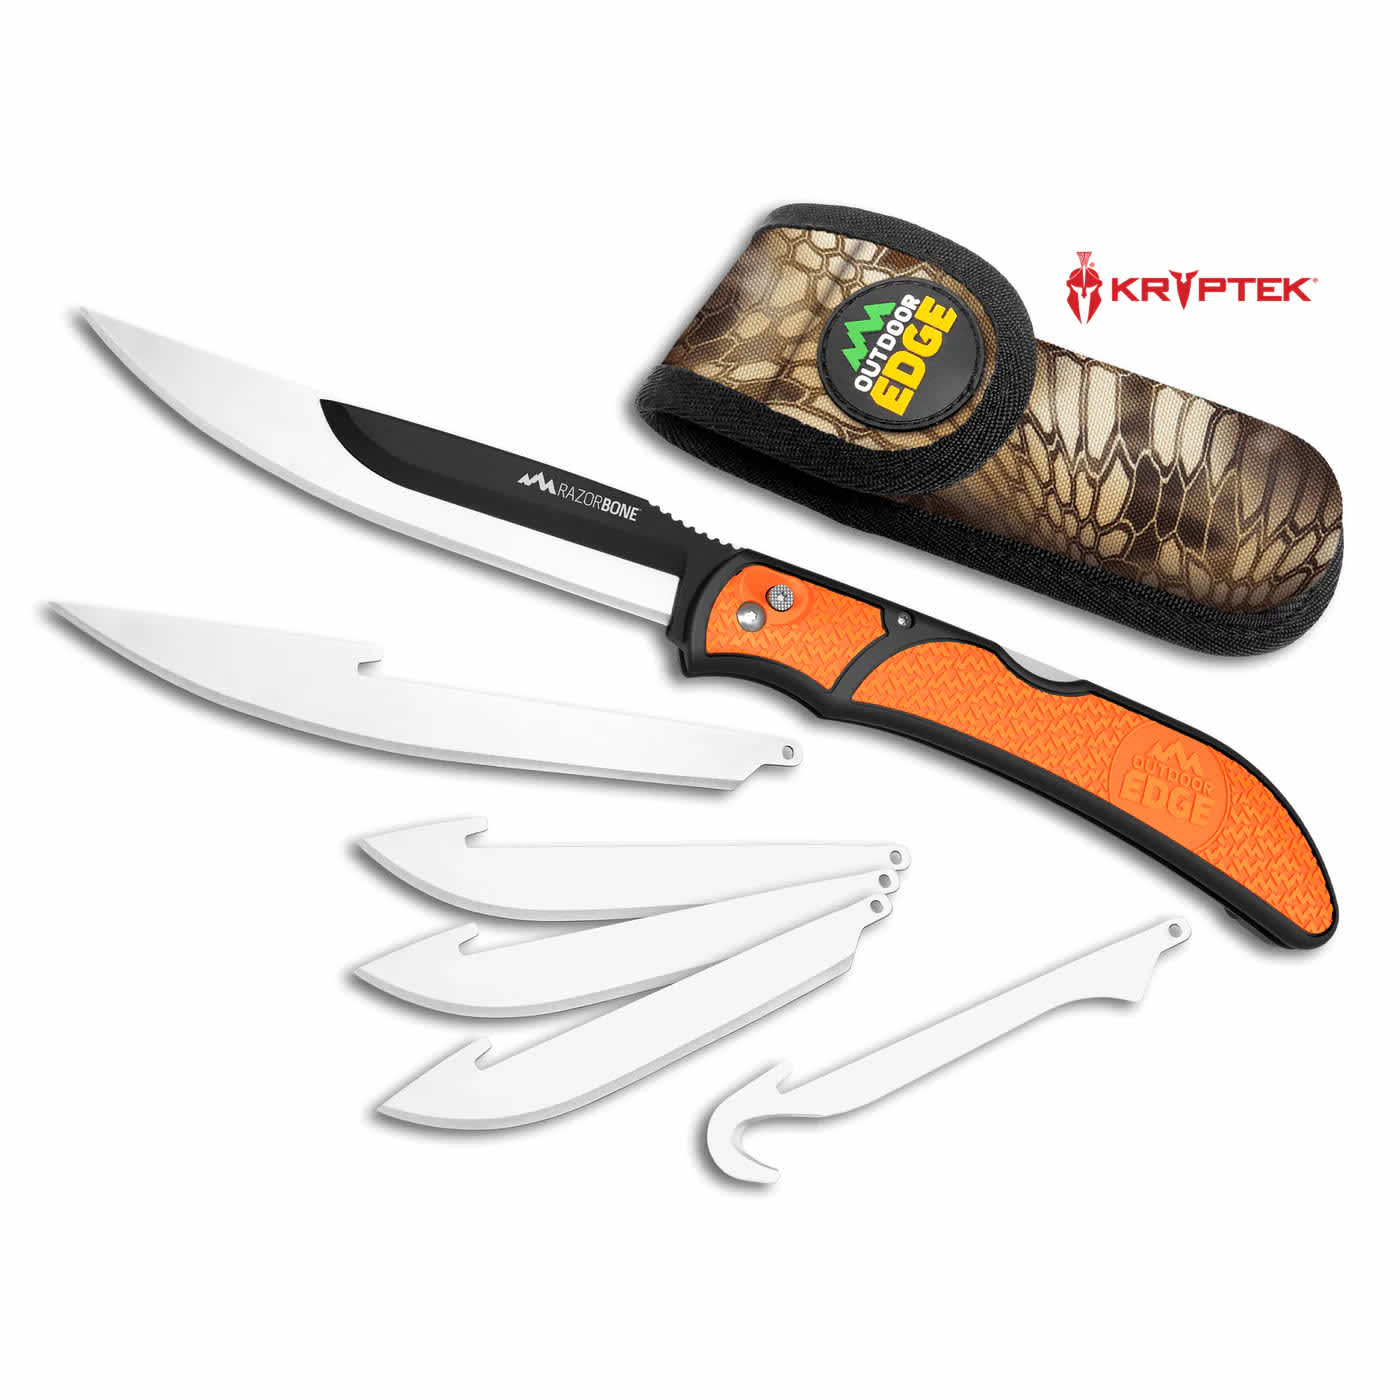 Outdoor Edge® Razorbone™ Folding Knife